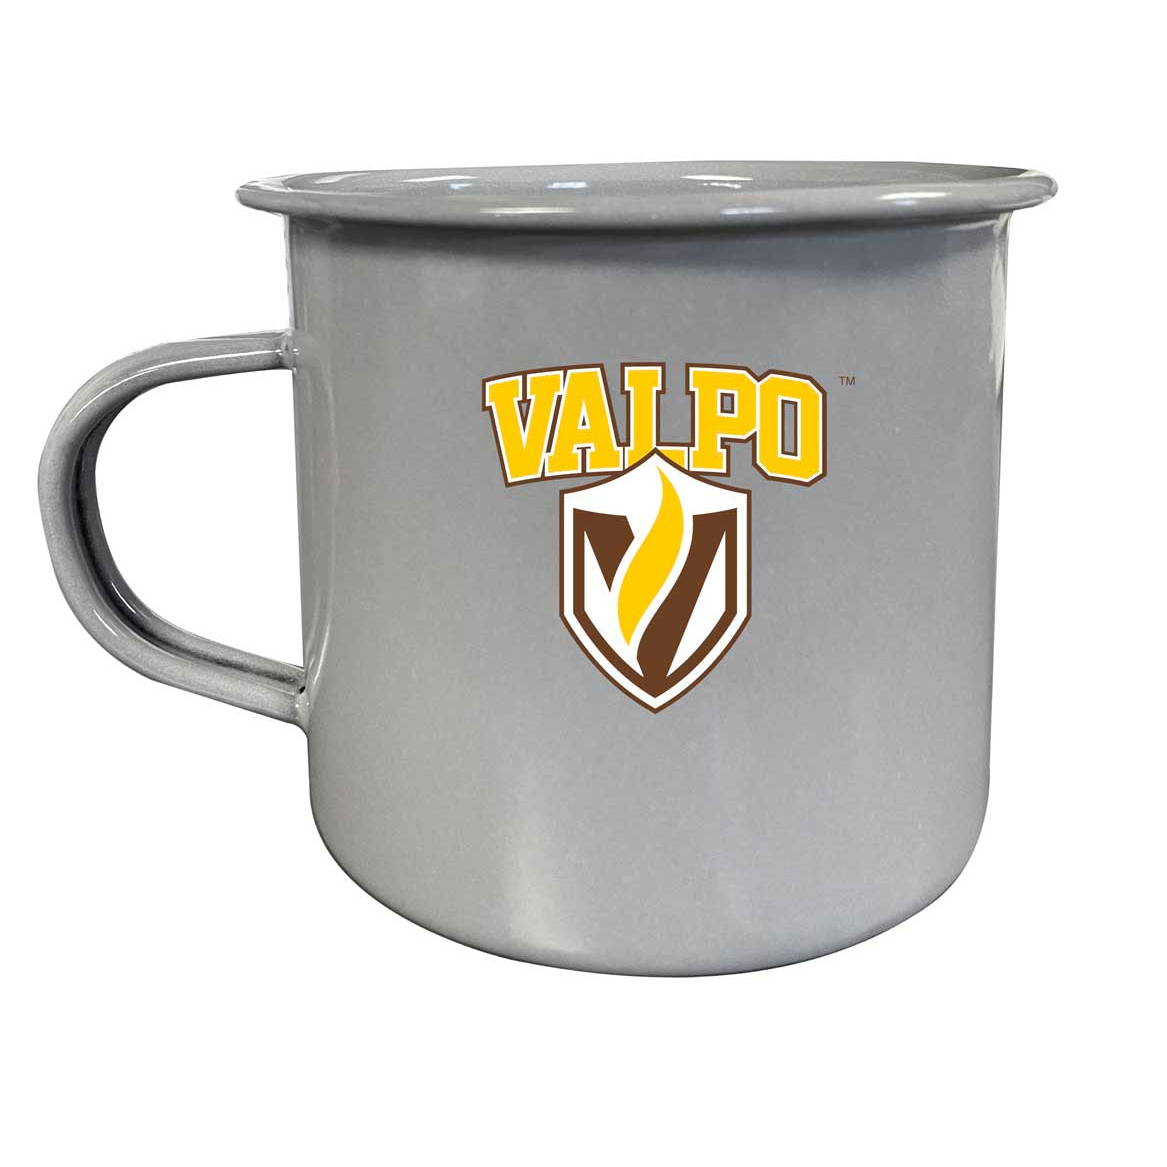 Valparaiso University Tin Camper Coffee Mug - Choose Your Color - Gray